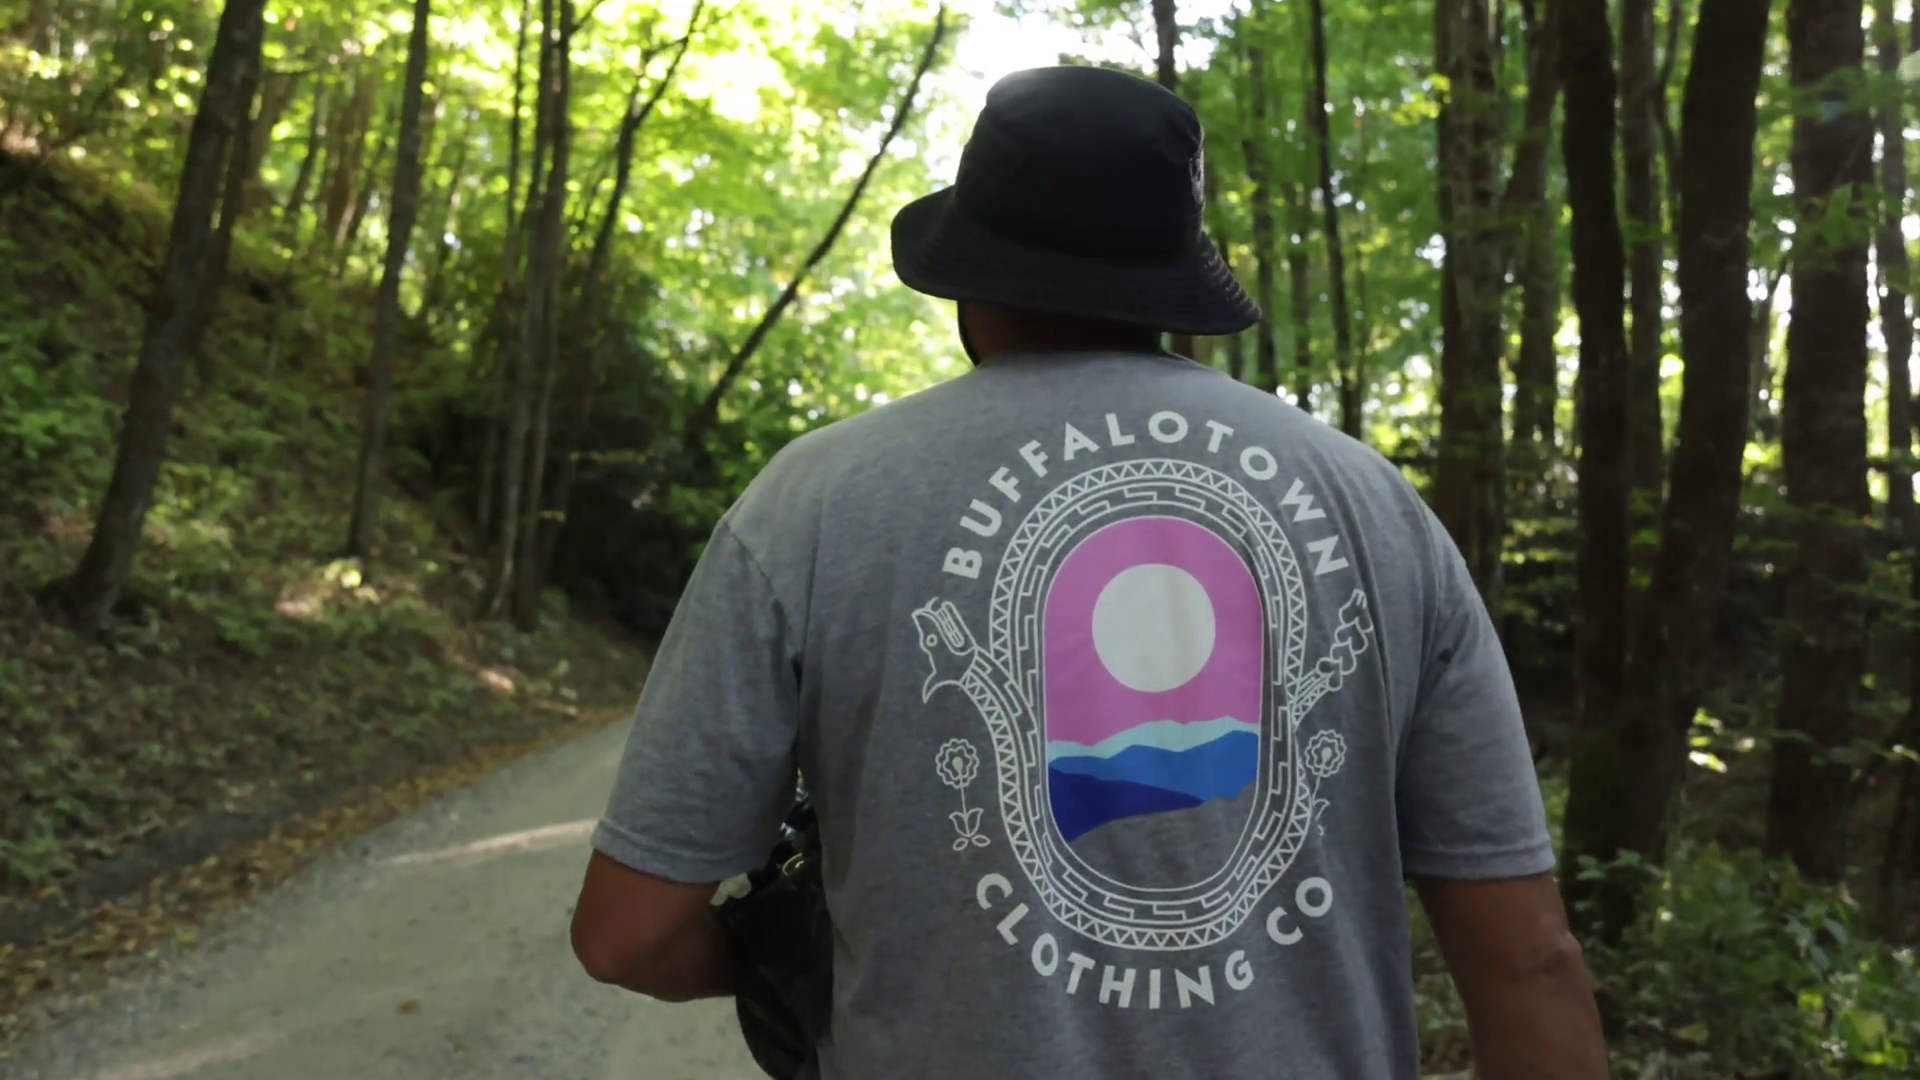 Luke Swimmer walking through the woods wearing a Buffalotown t-shirt.